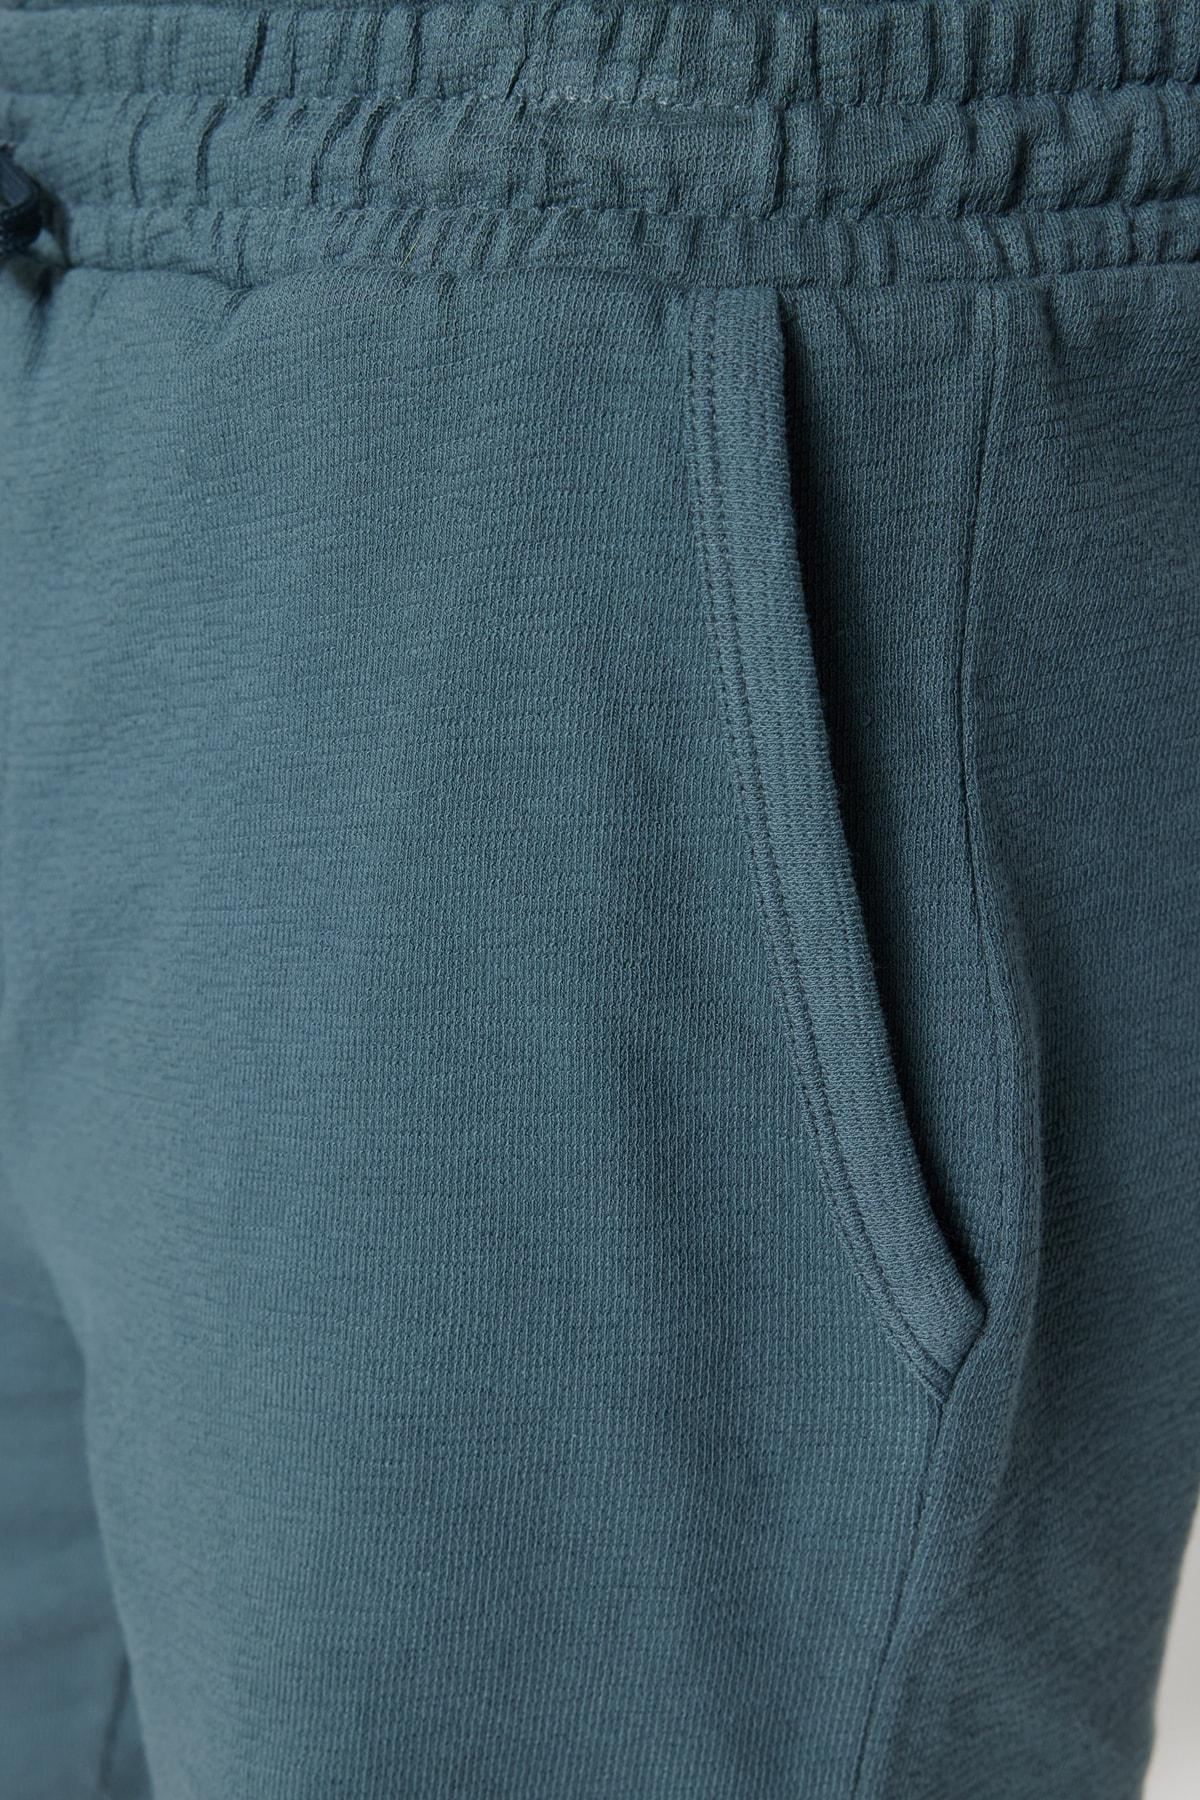 Trendyol - Blue Joggers Shorts